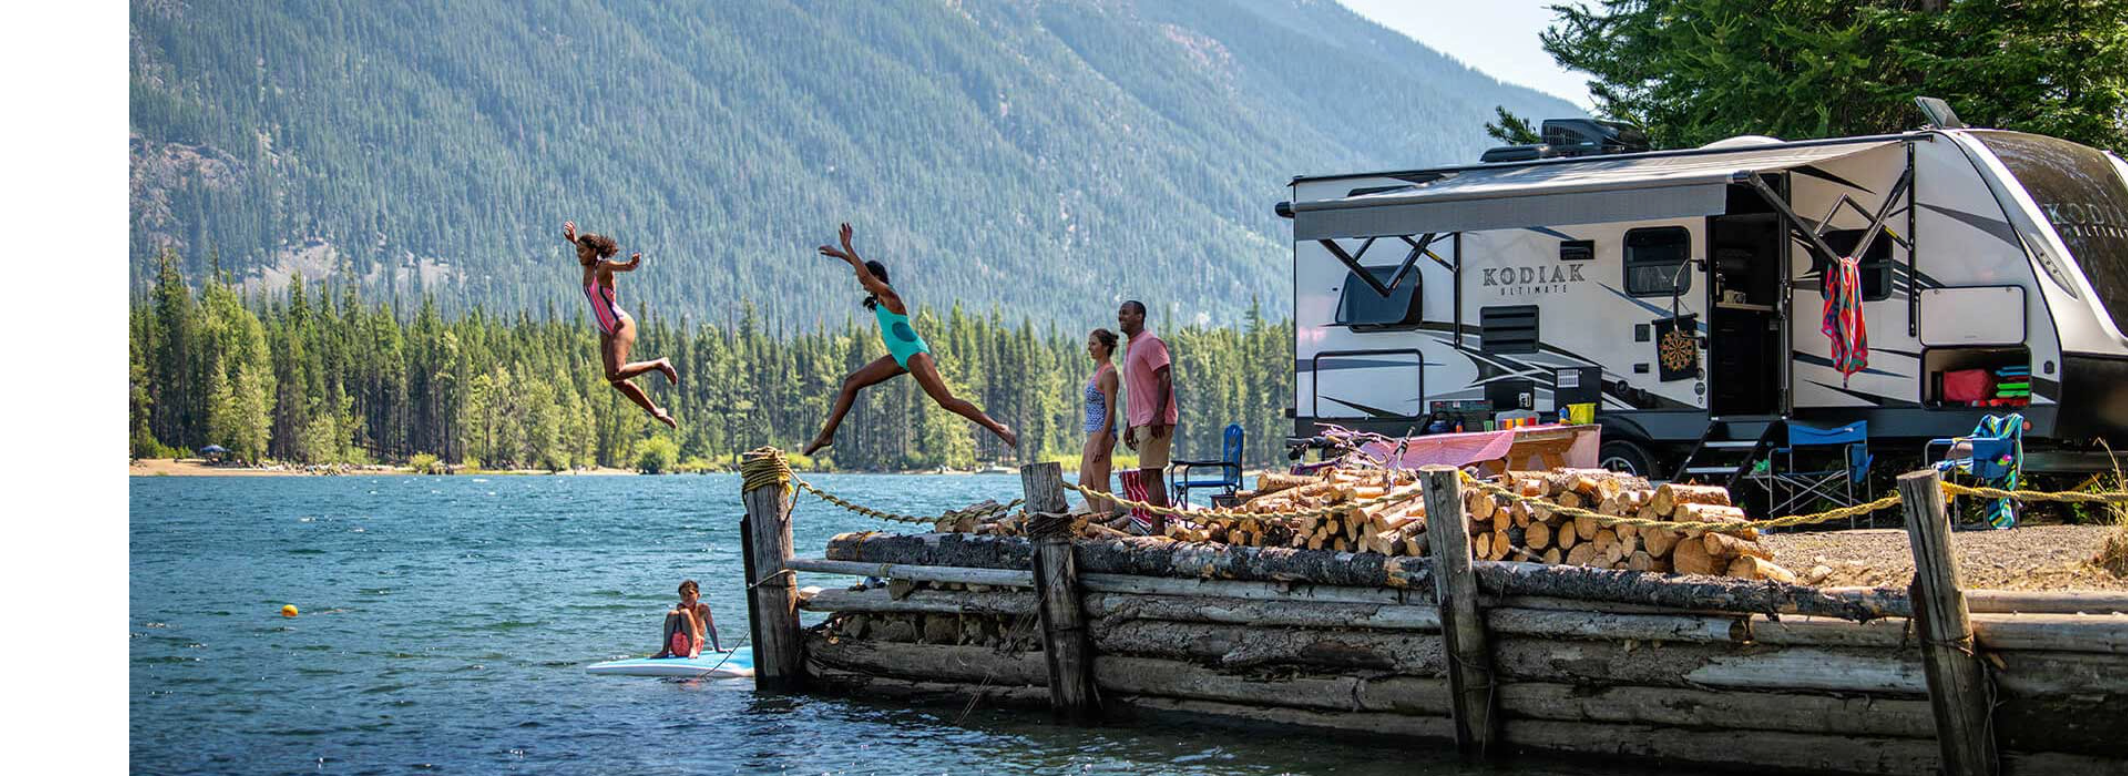 Kodiak RV near lake with kids jumping into lake